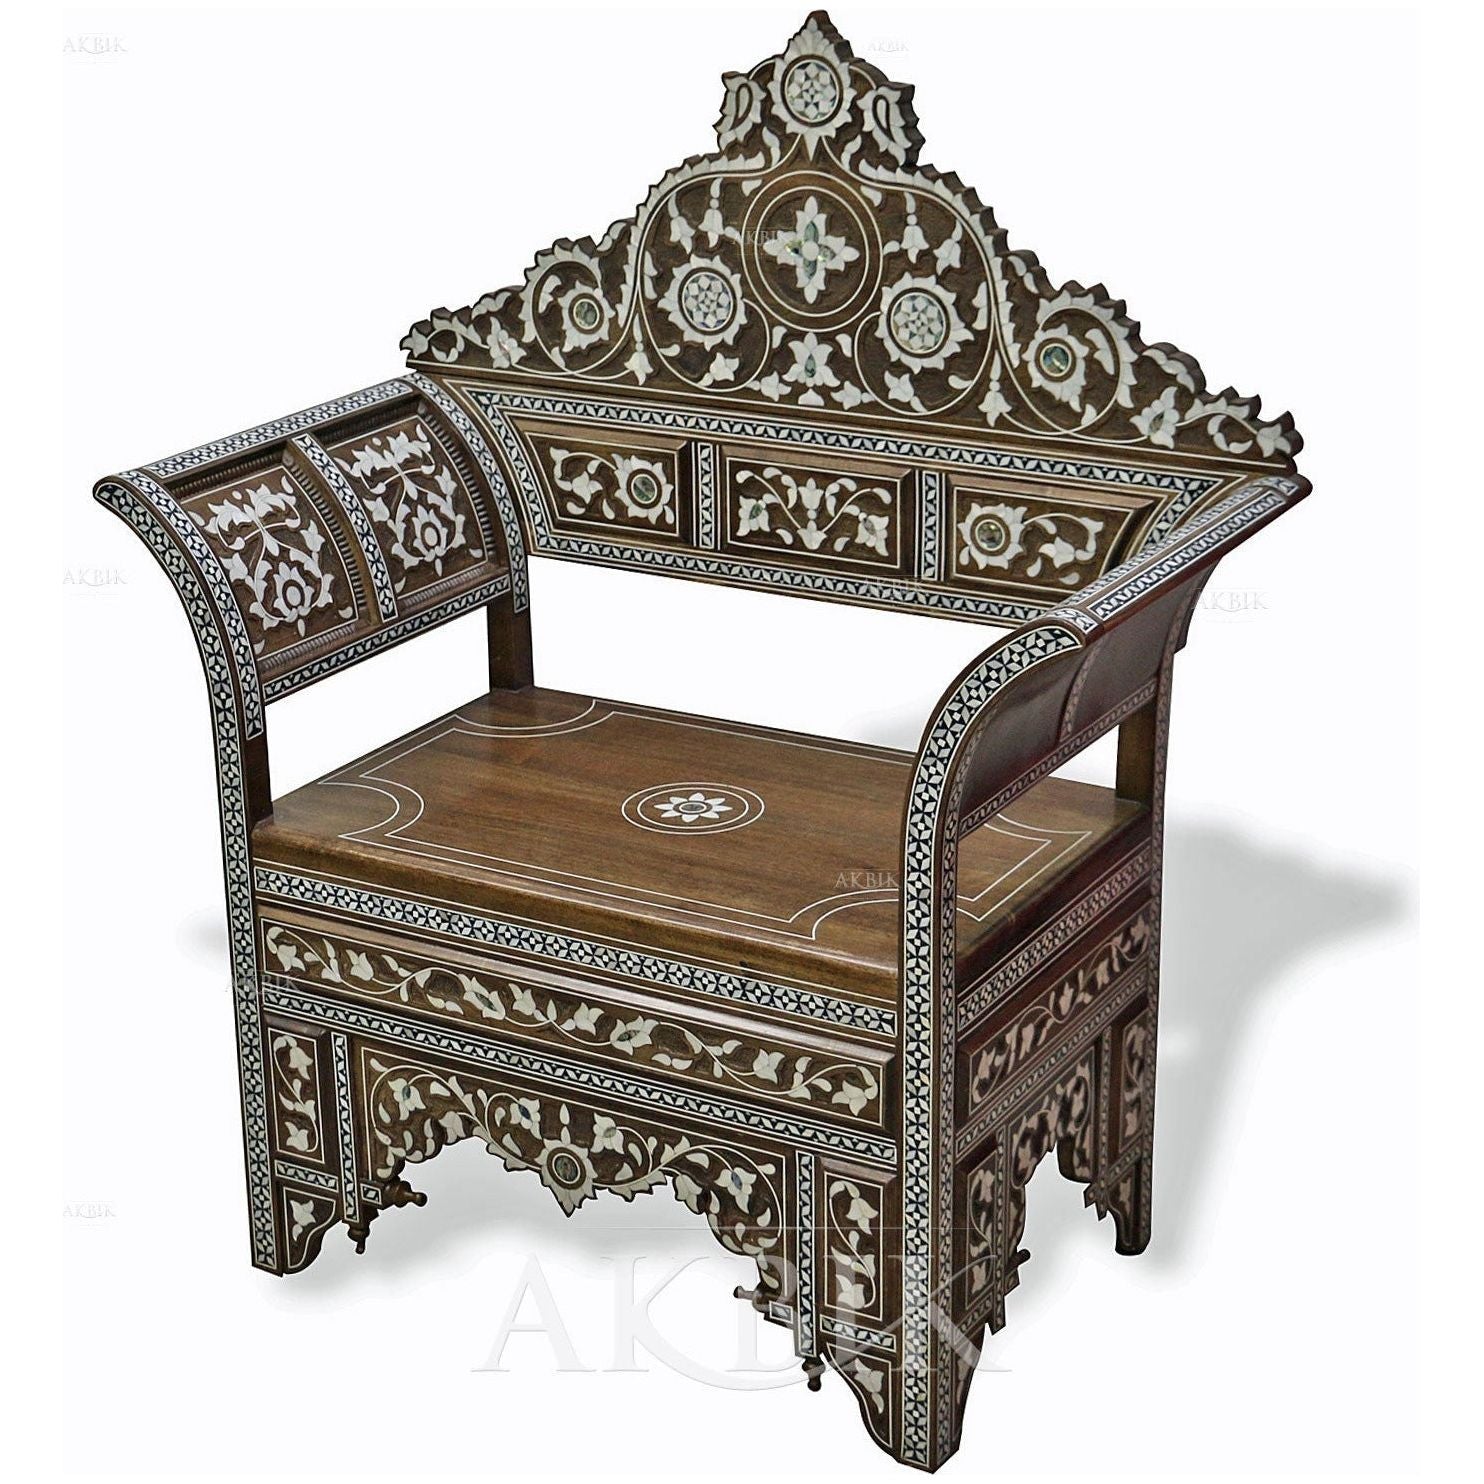 TULIP OF PEARLS LEVANTINE CHAIR - AKBIK Furniture & Design